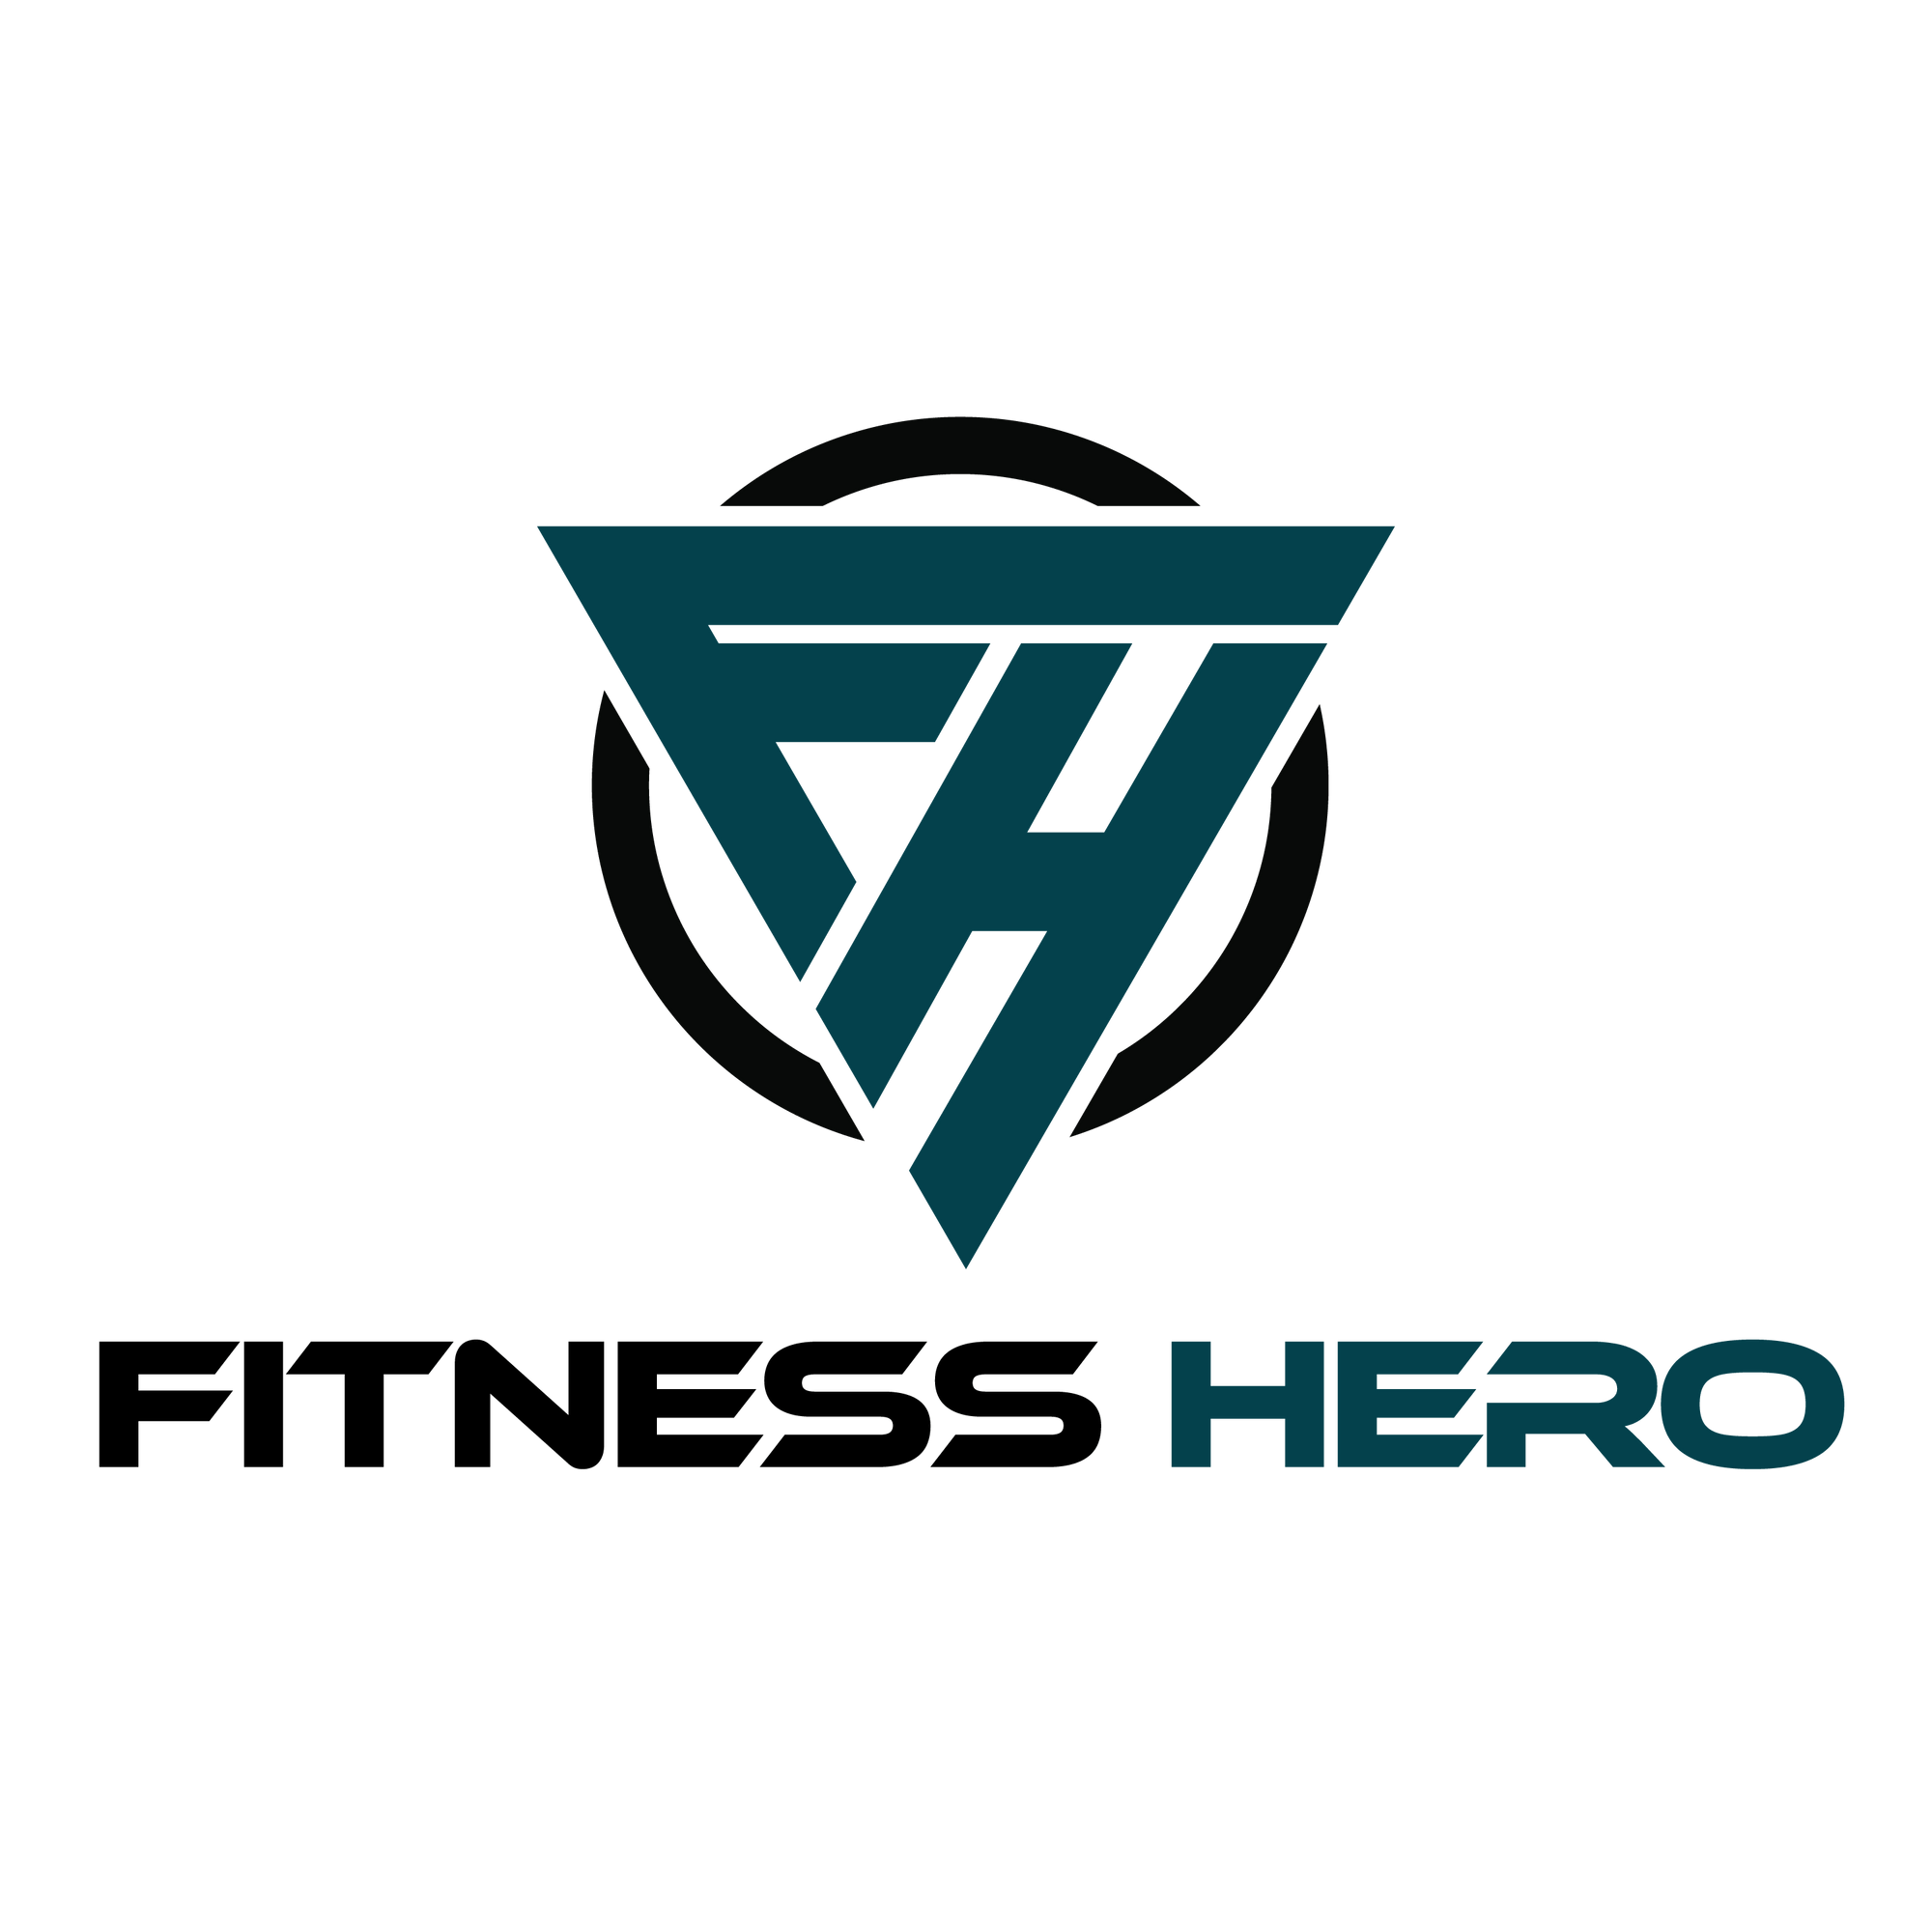 Gift Card - Fitness Hero Brand new